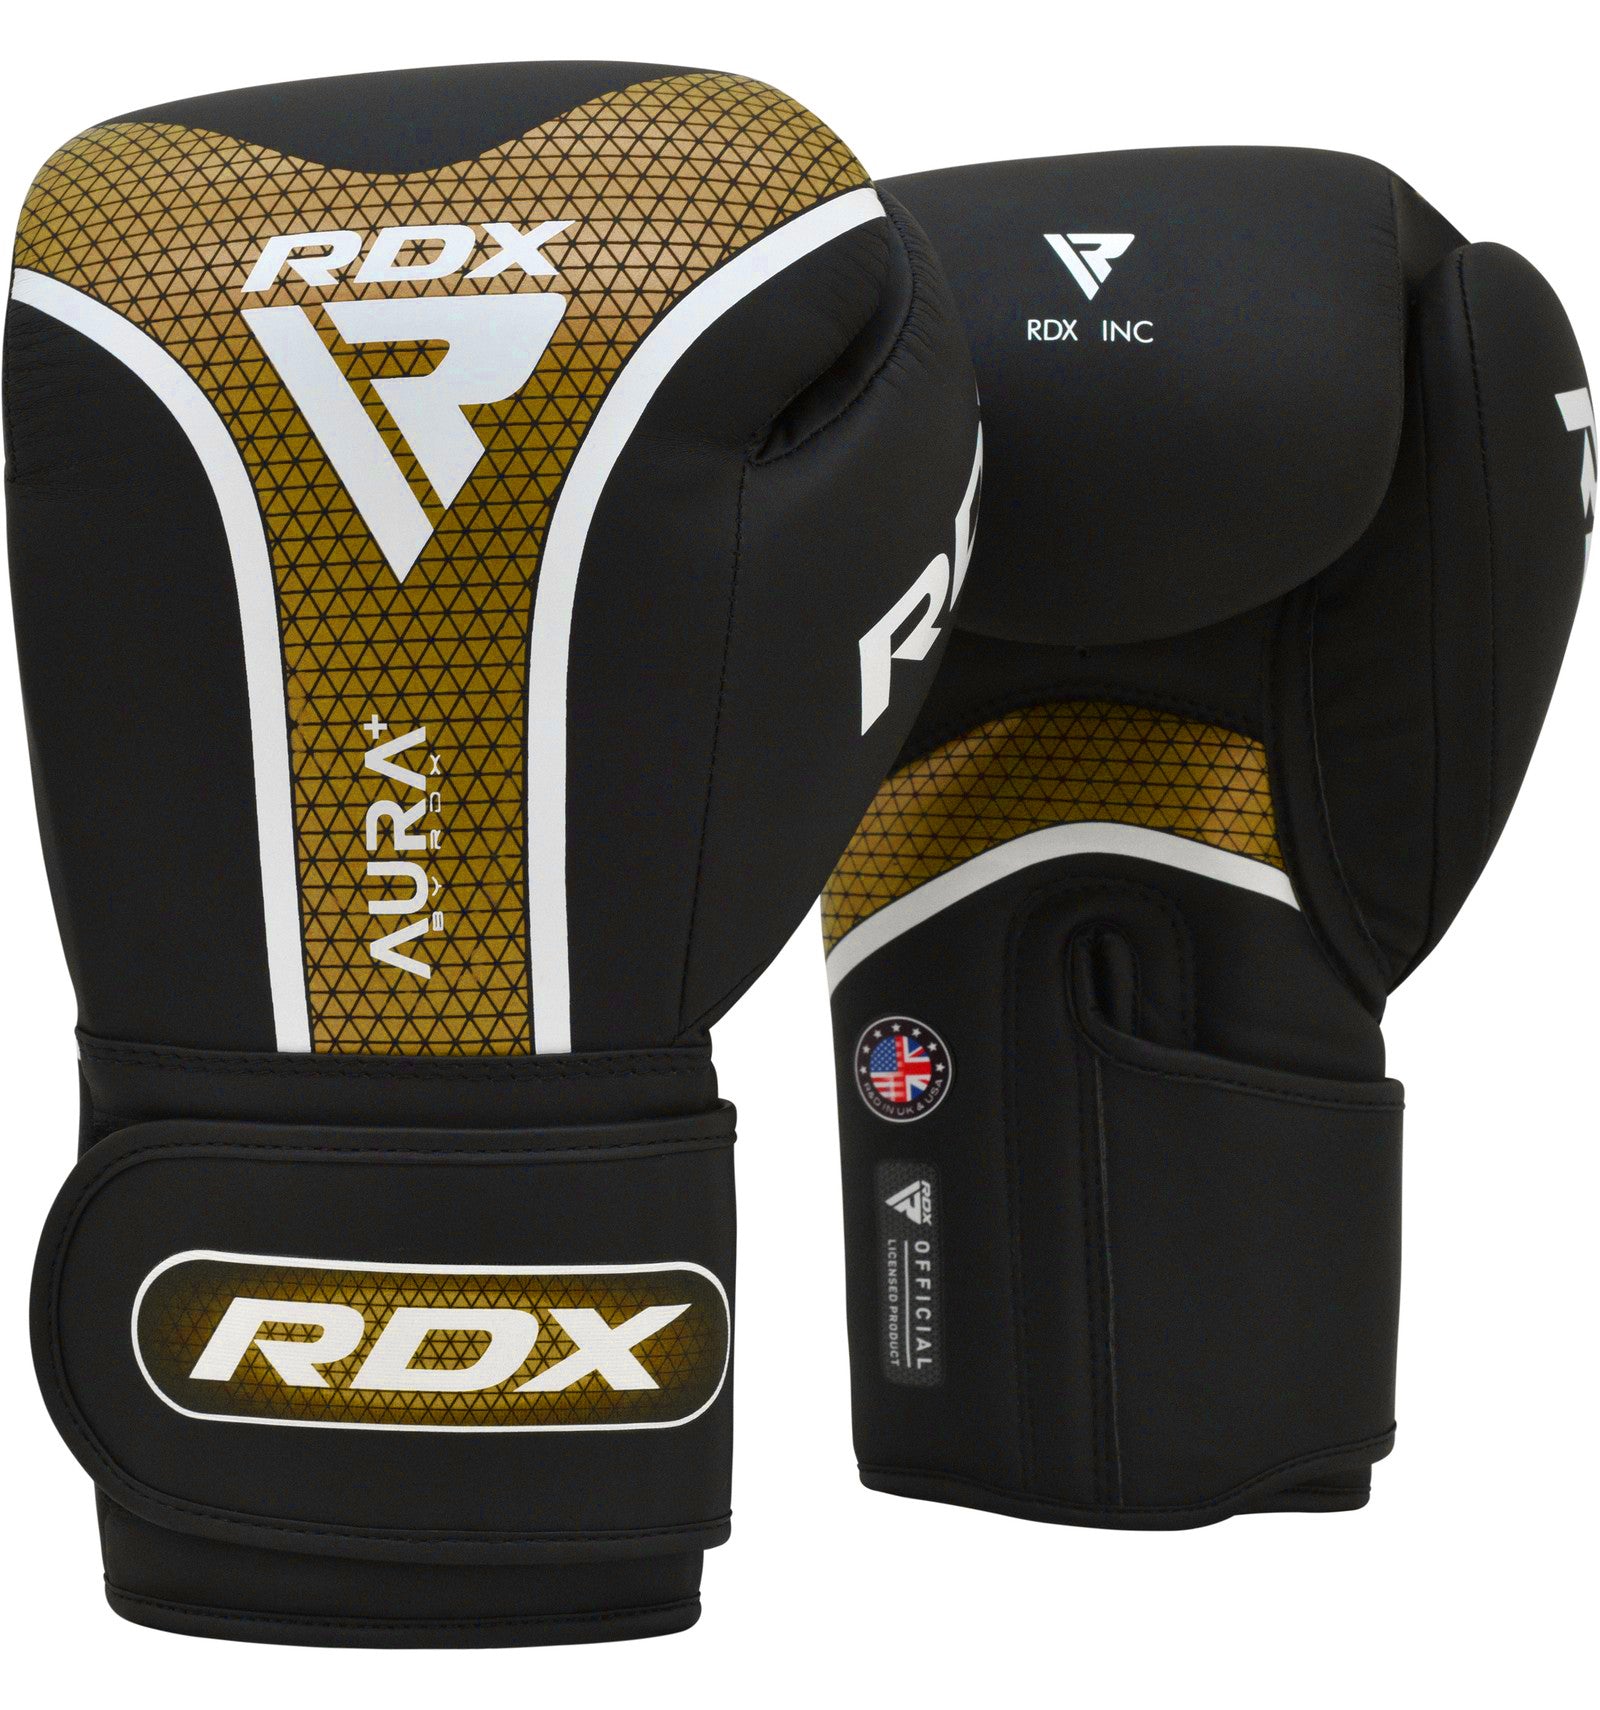 RDX T17 Aura Nova Tech Boxing Sparring Gloves - Golden - 14oz - Shock Absorbing Foam, Moisture Wicking for Heavy Punching Bag Training, Kickboxing, Muay Thai, Sparring - Pro-Distributing